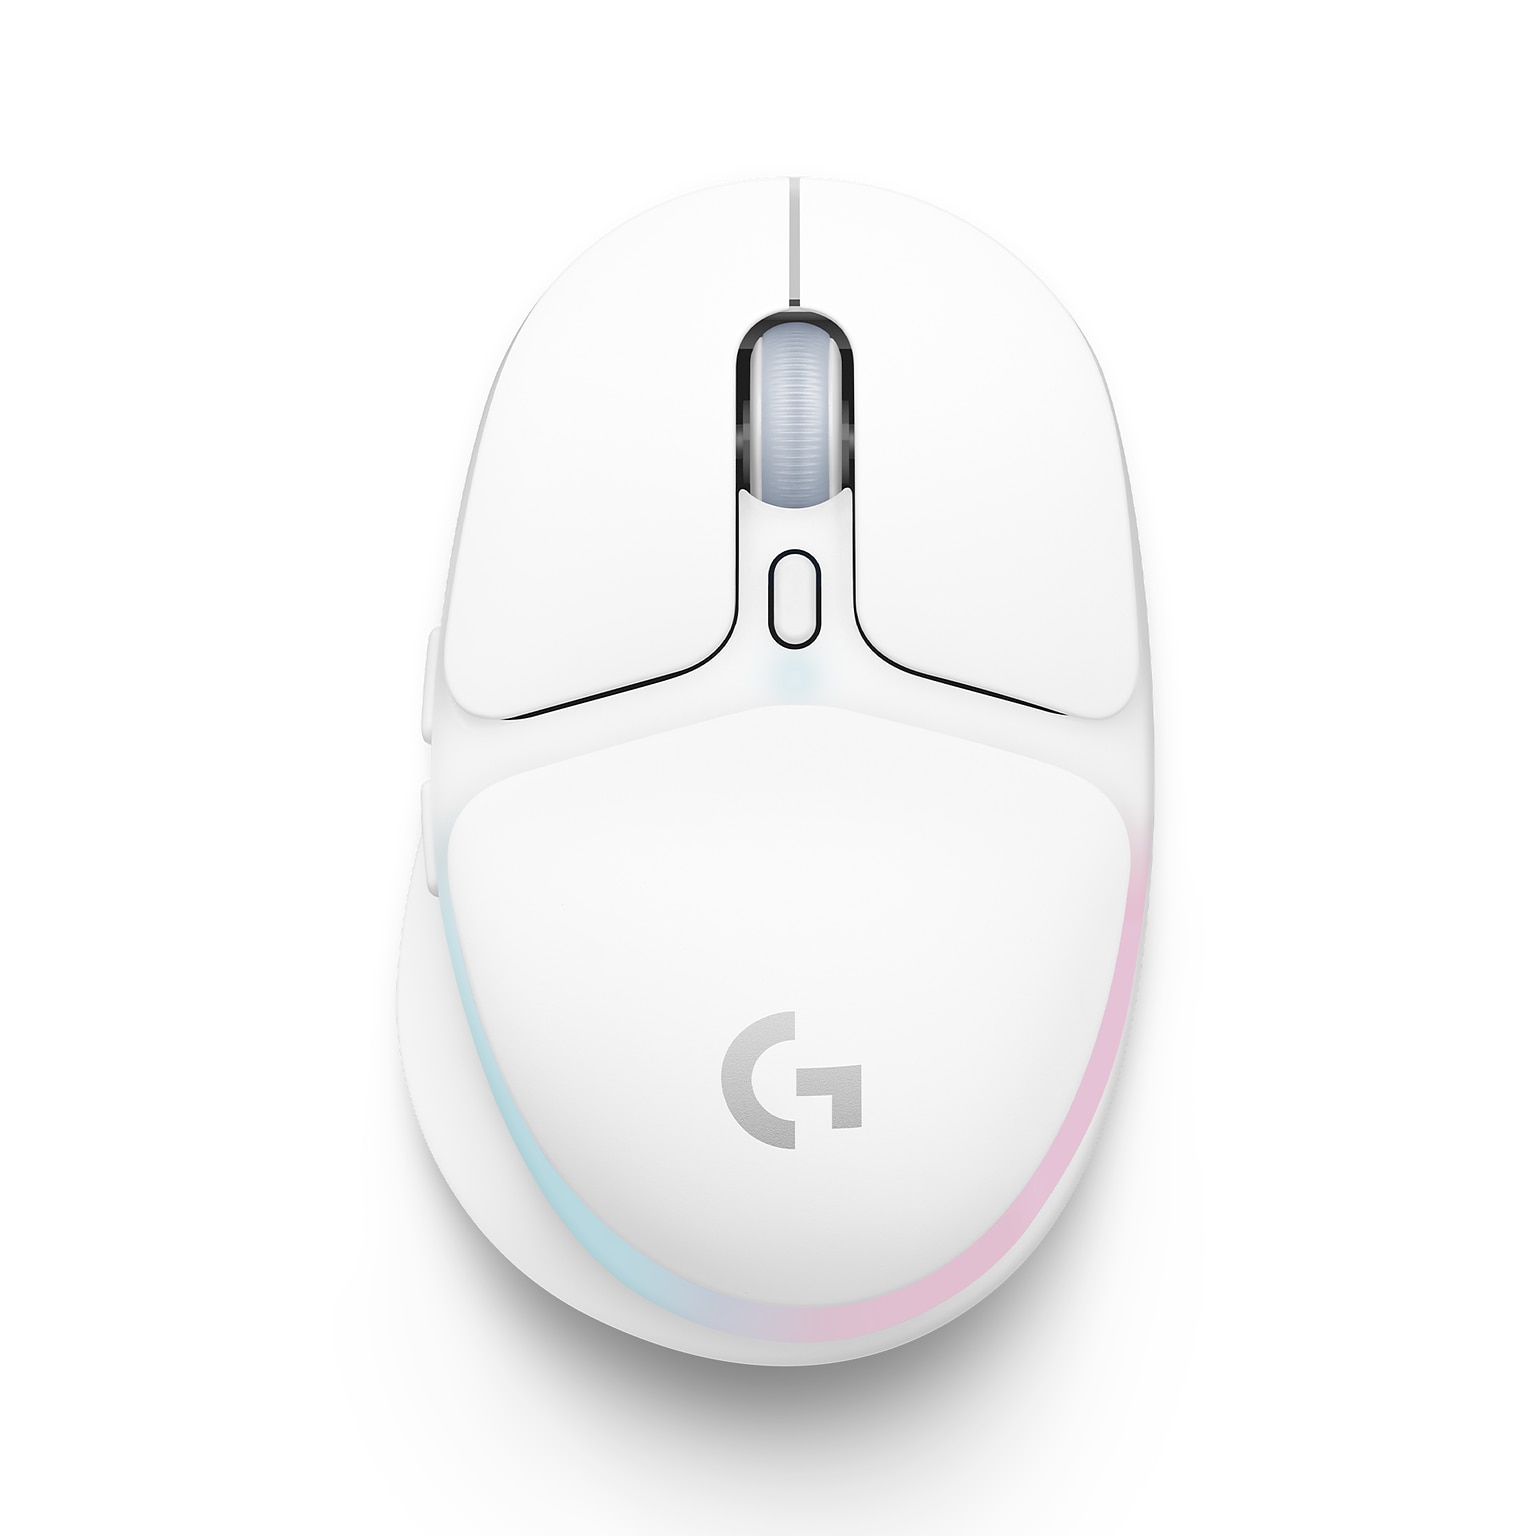 Logitech Aurora G705 Wireless Optical Gaming Mouse, White Mist (910-006365)